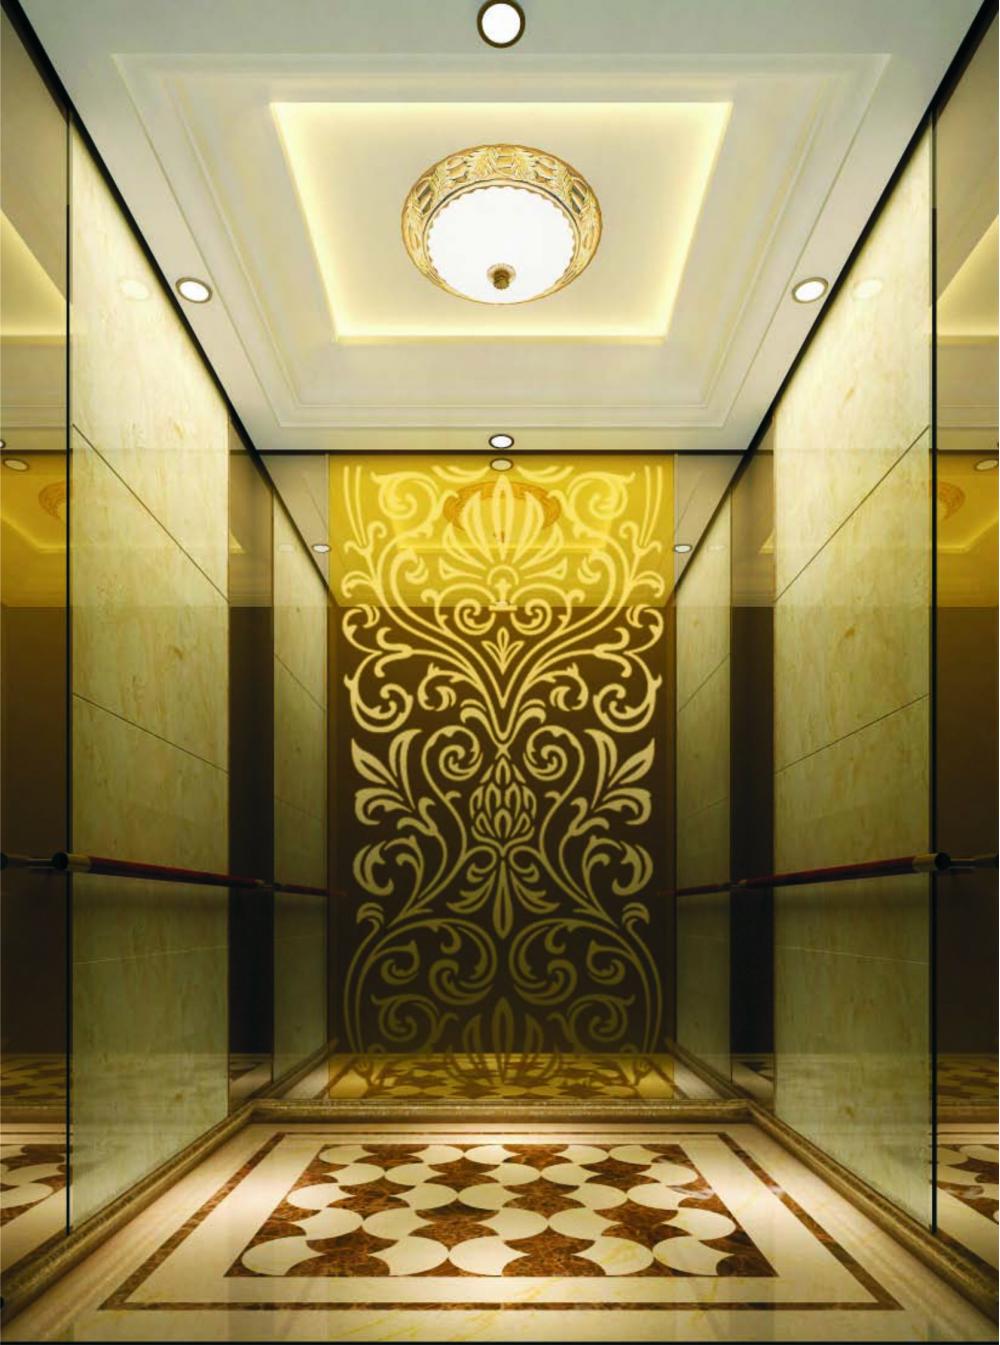 IFE JOYMORE-7 Singapore Standard Residential Elevator